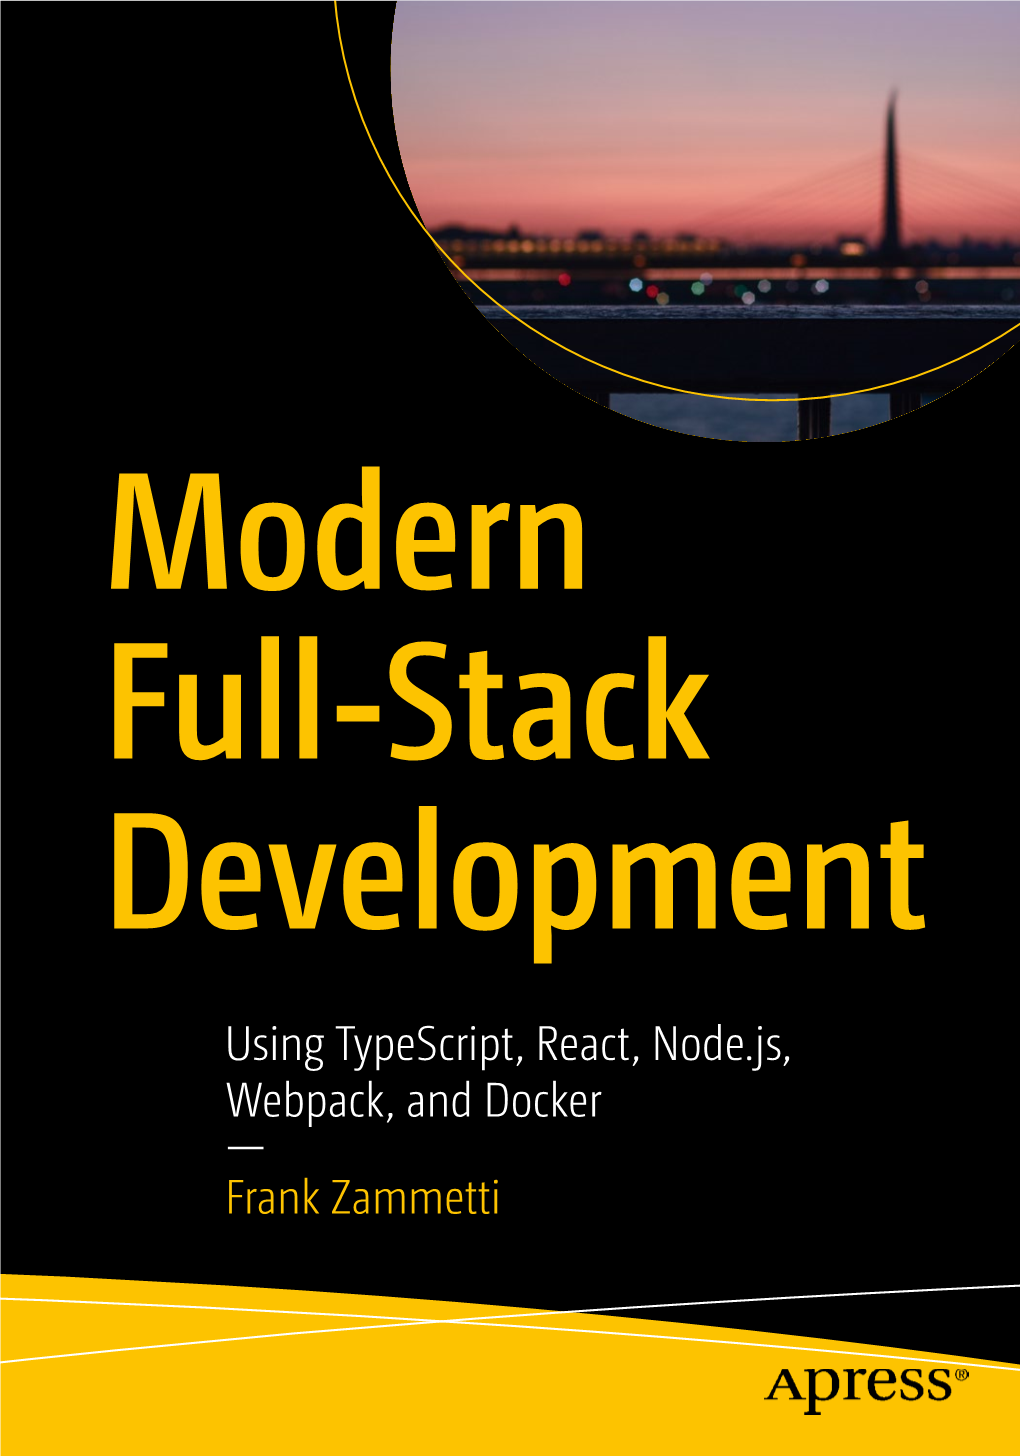 Using Typescript, React, Node.Js, Webpack, and Docker — Frank Zammetti Modern Full-Stack Development Using Typescript, React, Node.Js, Webpack, and Docker